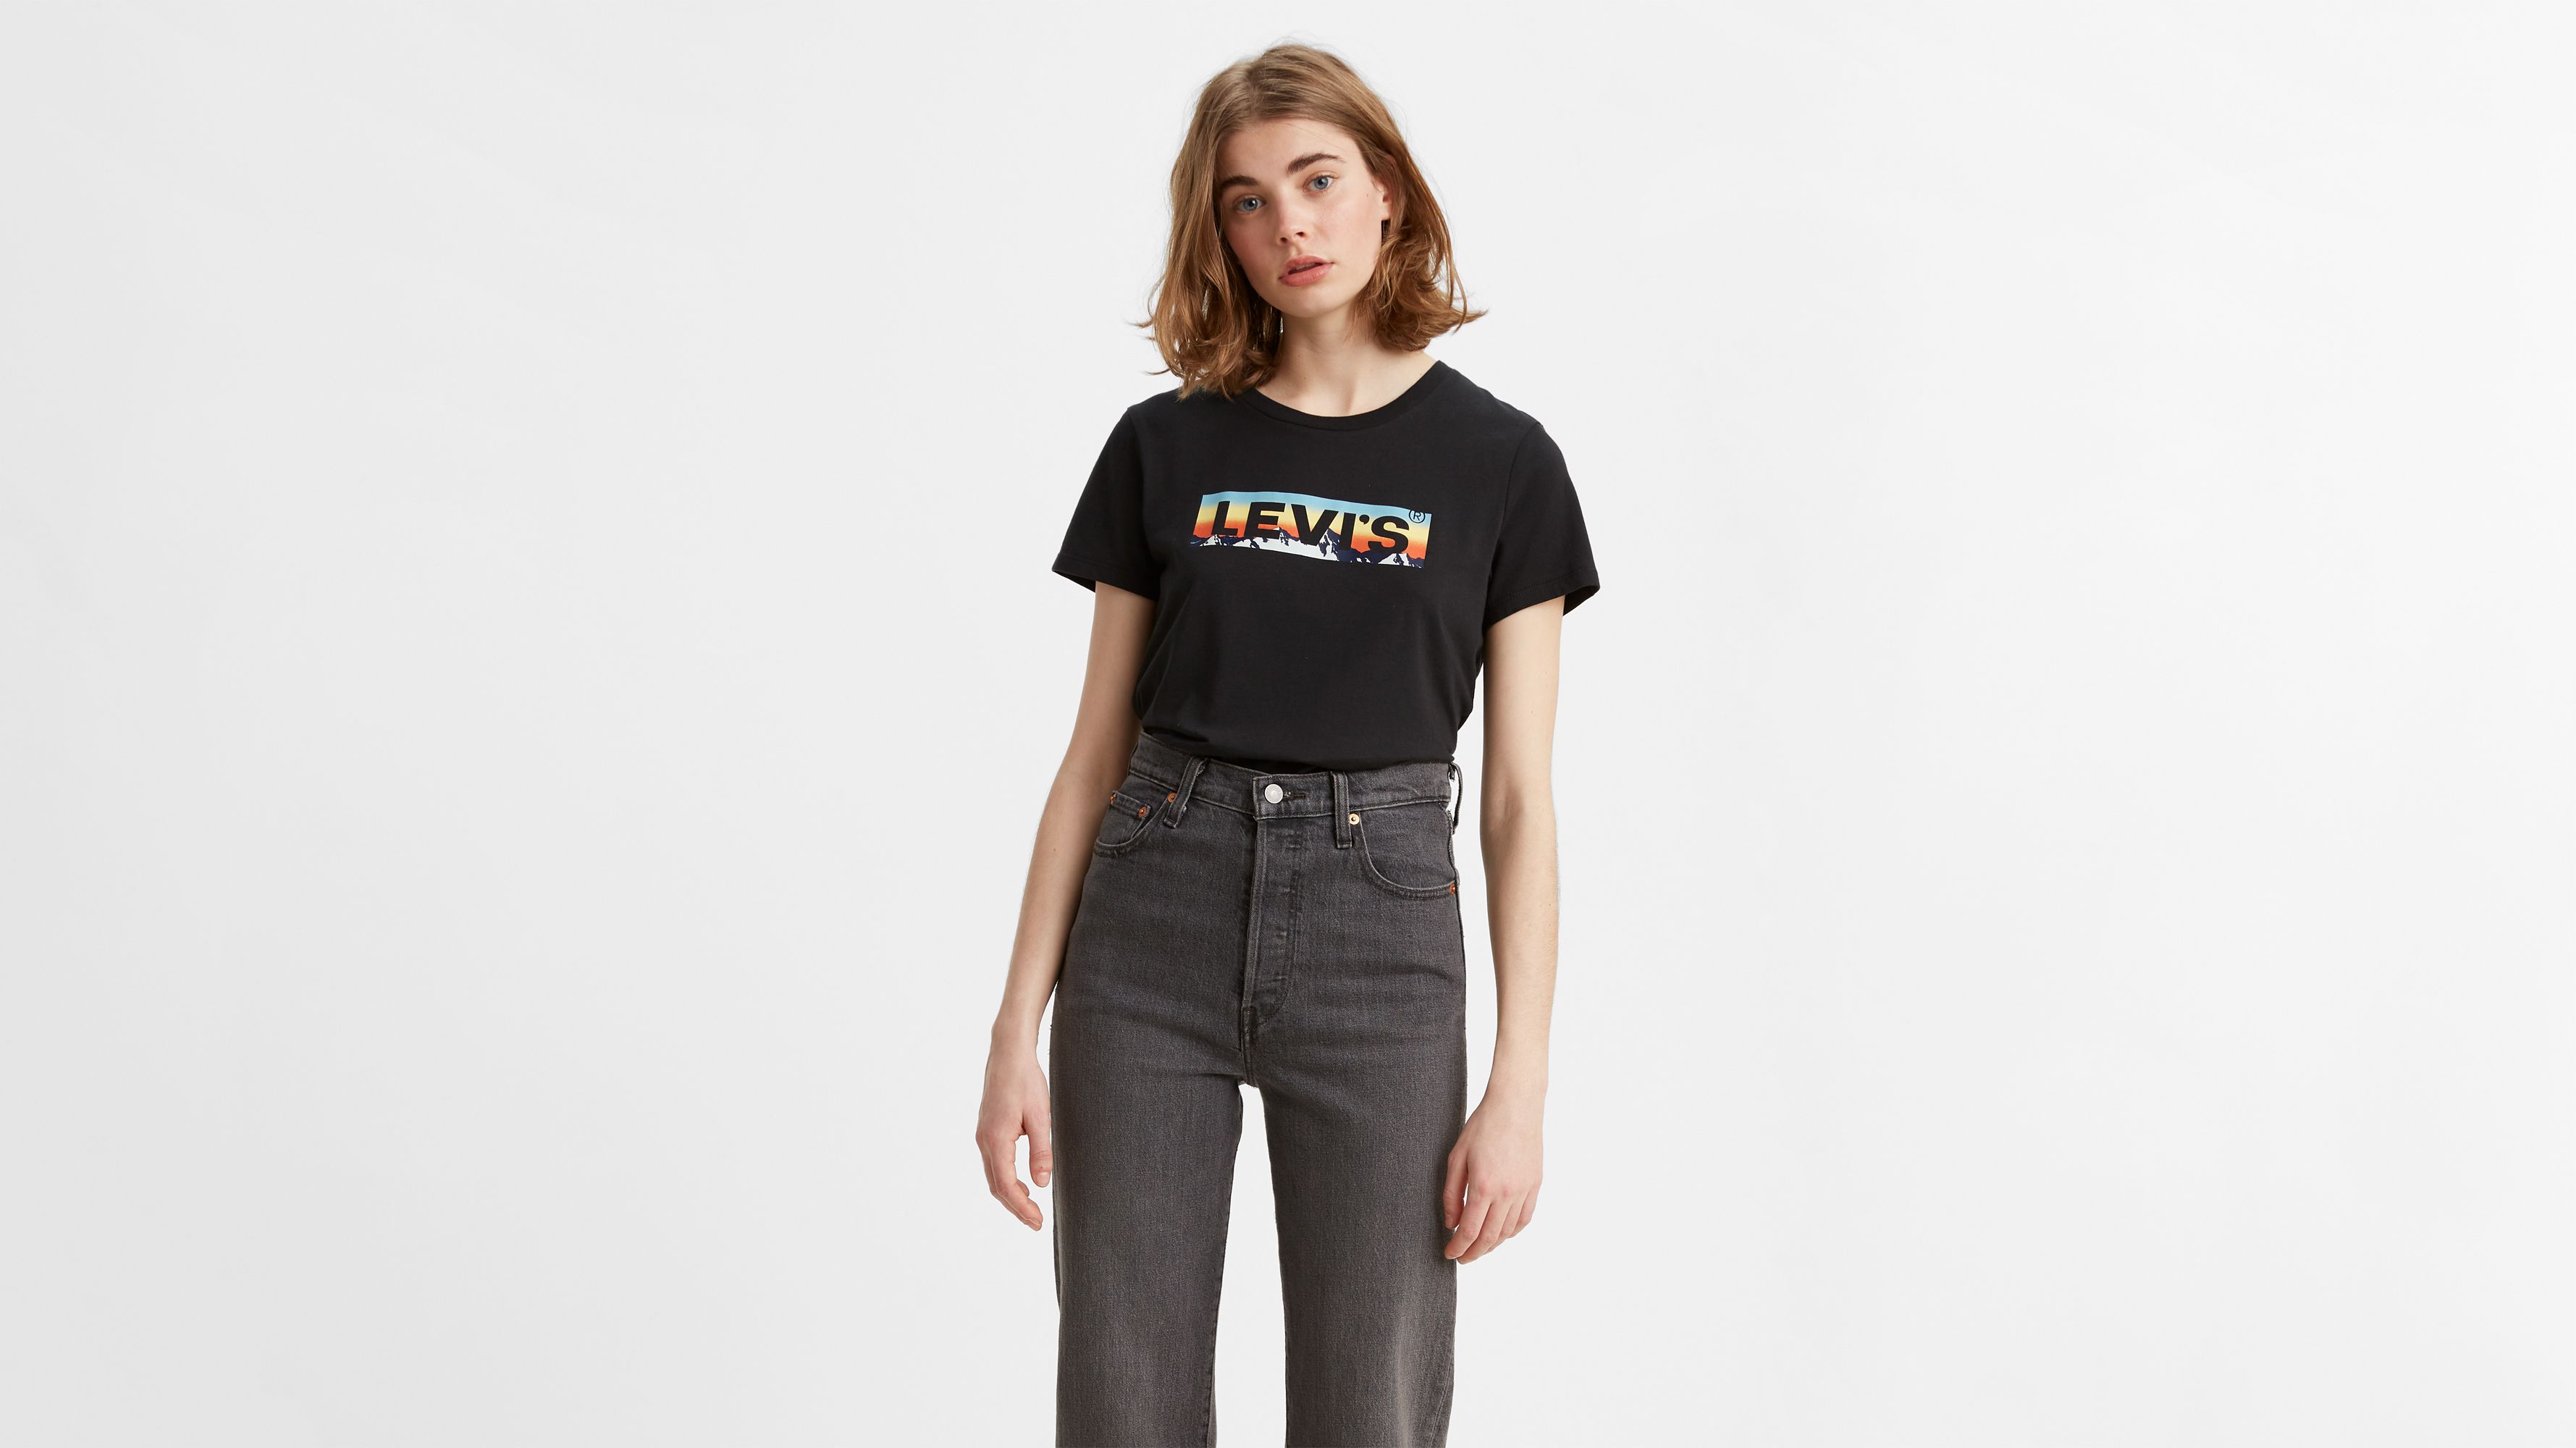 purchase levis jeans online